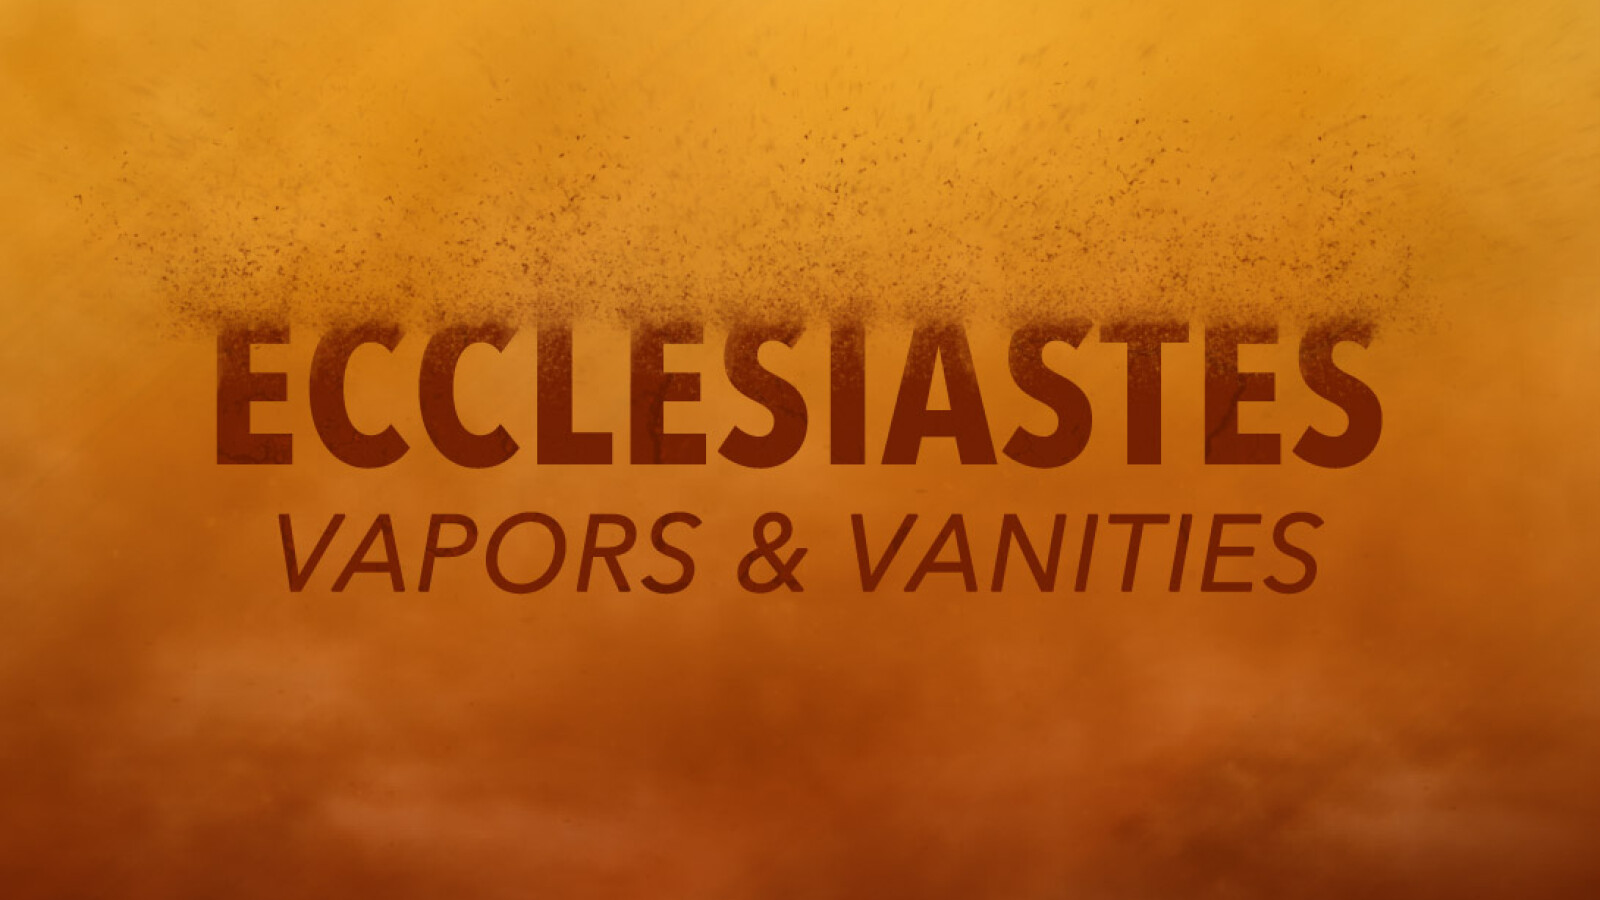 Ecclesiastes: Vapors & Vanities